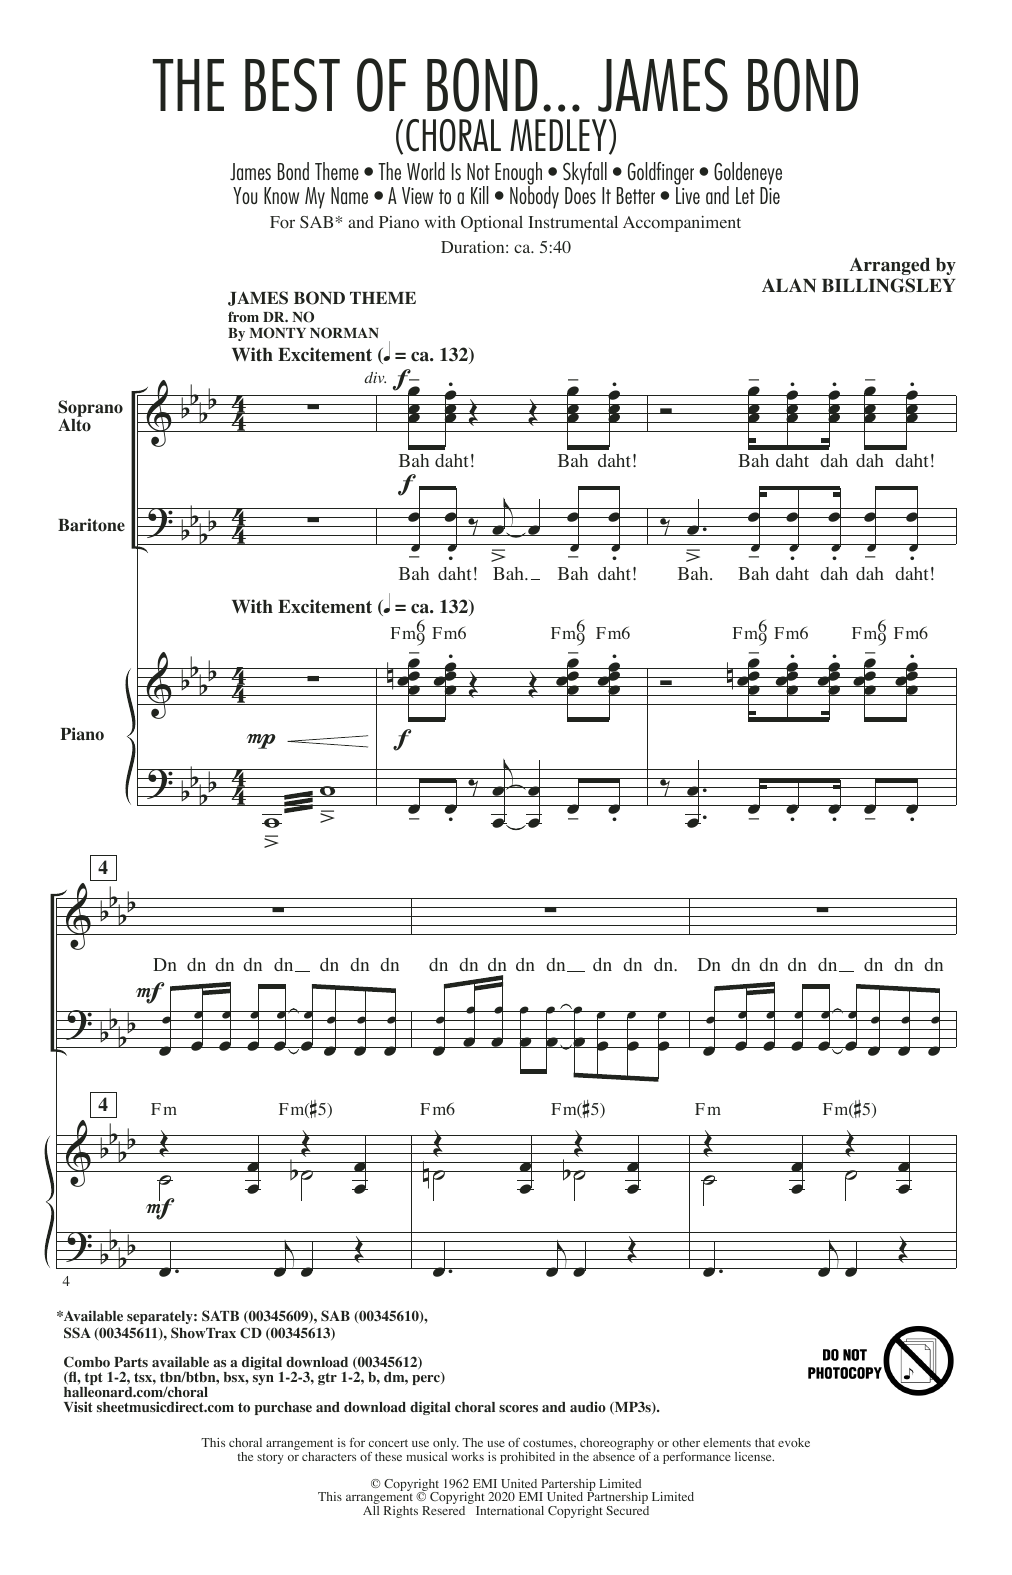 Alan Billingsley The Best of Bond... James Bond (Choral Medley) Sheet Music Notes & Chords for SATB Choir - Download or Print PDF